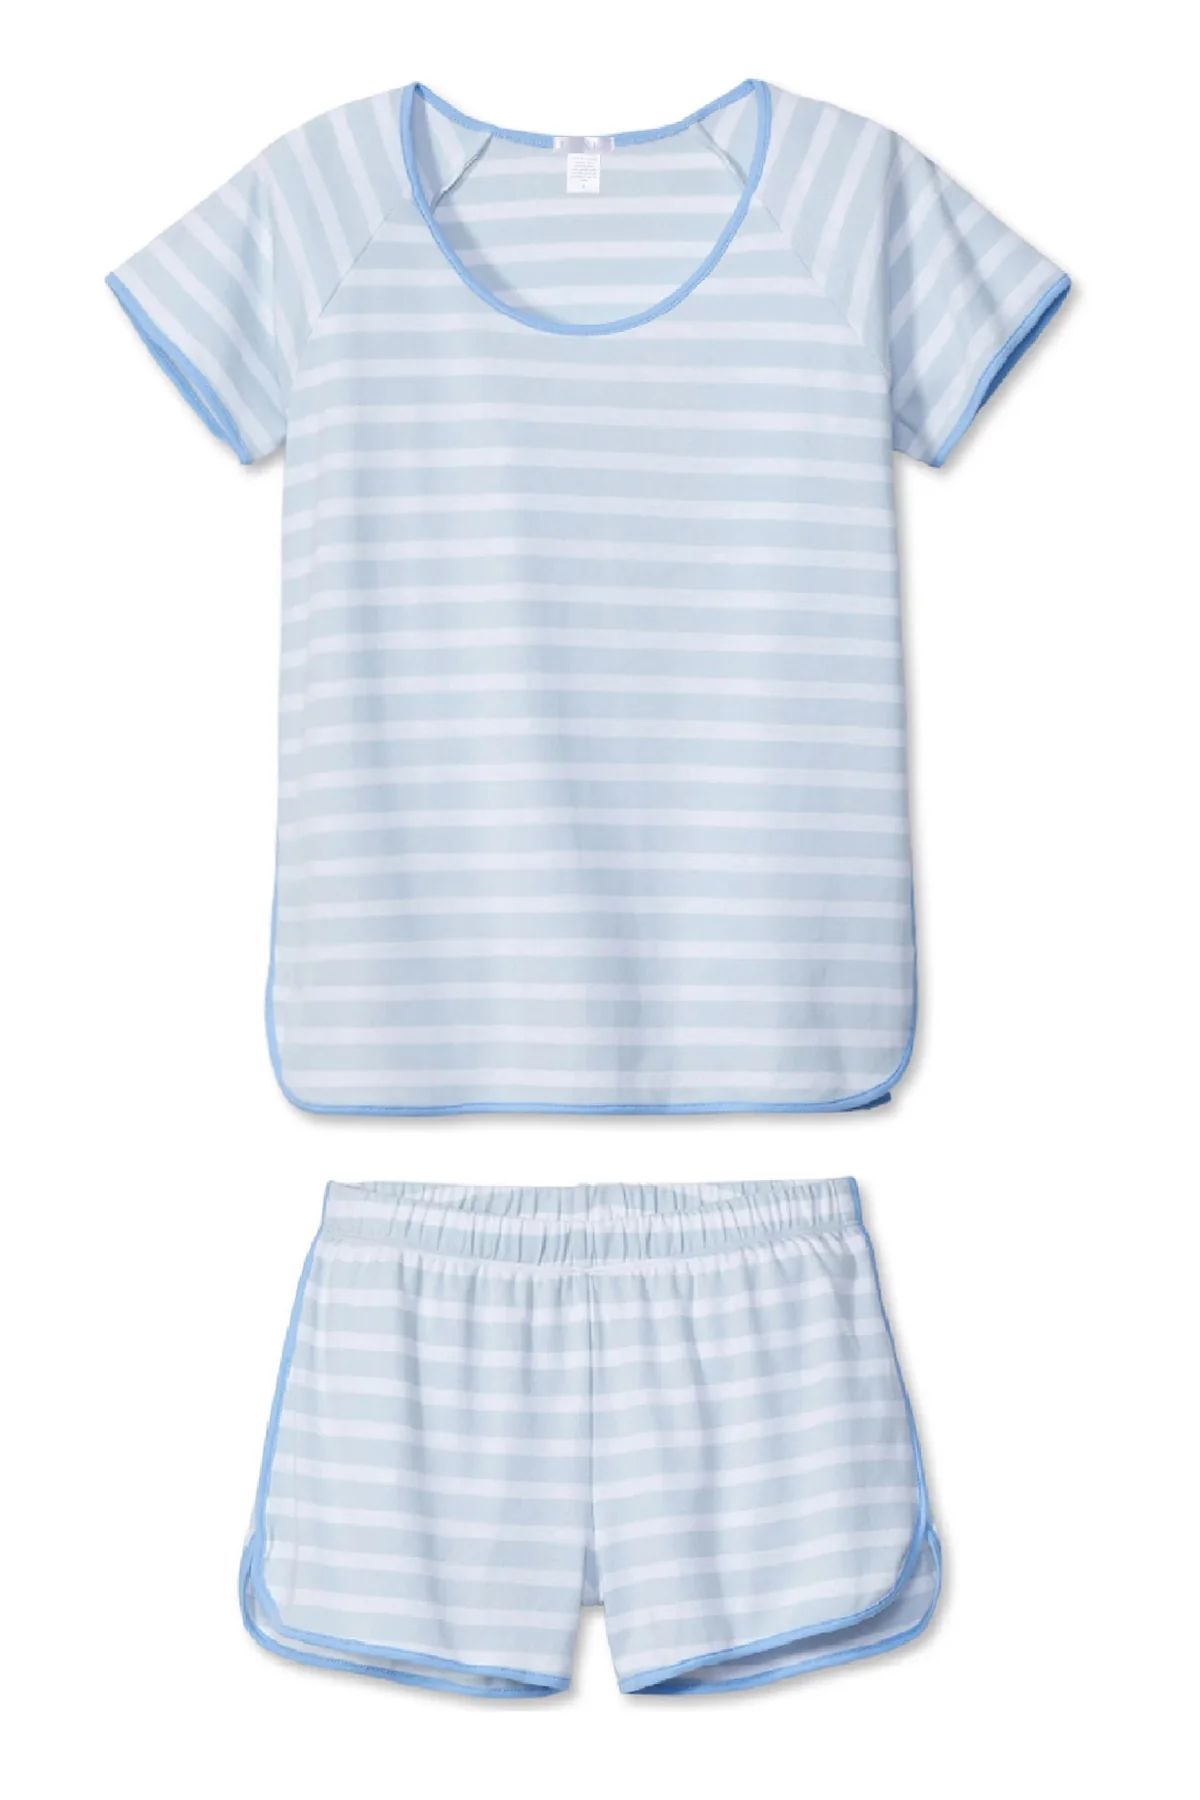 Pima Shorts Set in Lily | LAKE Pajamas